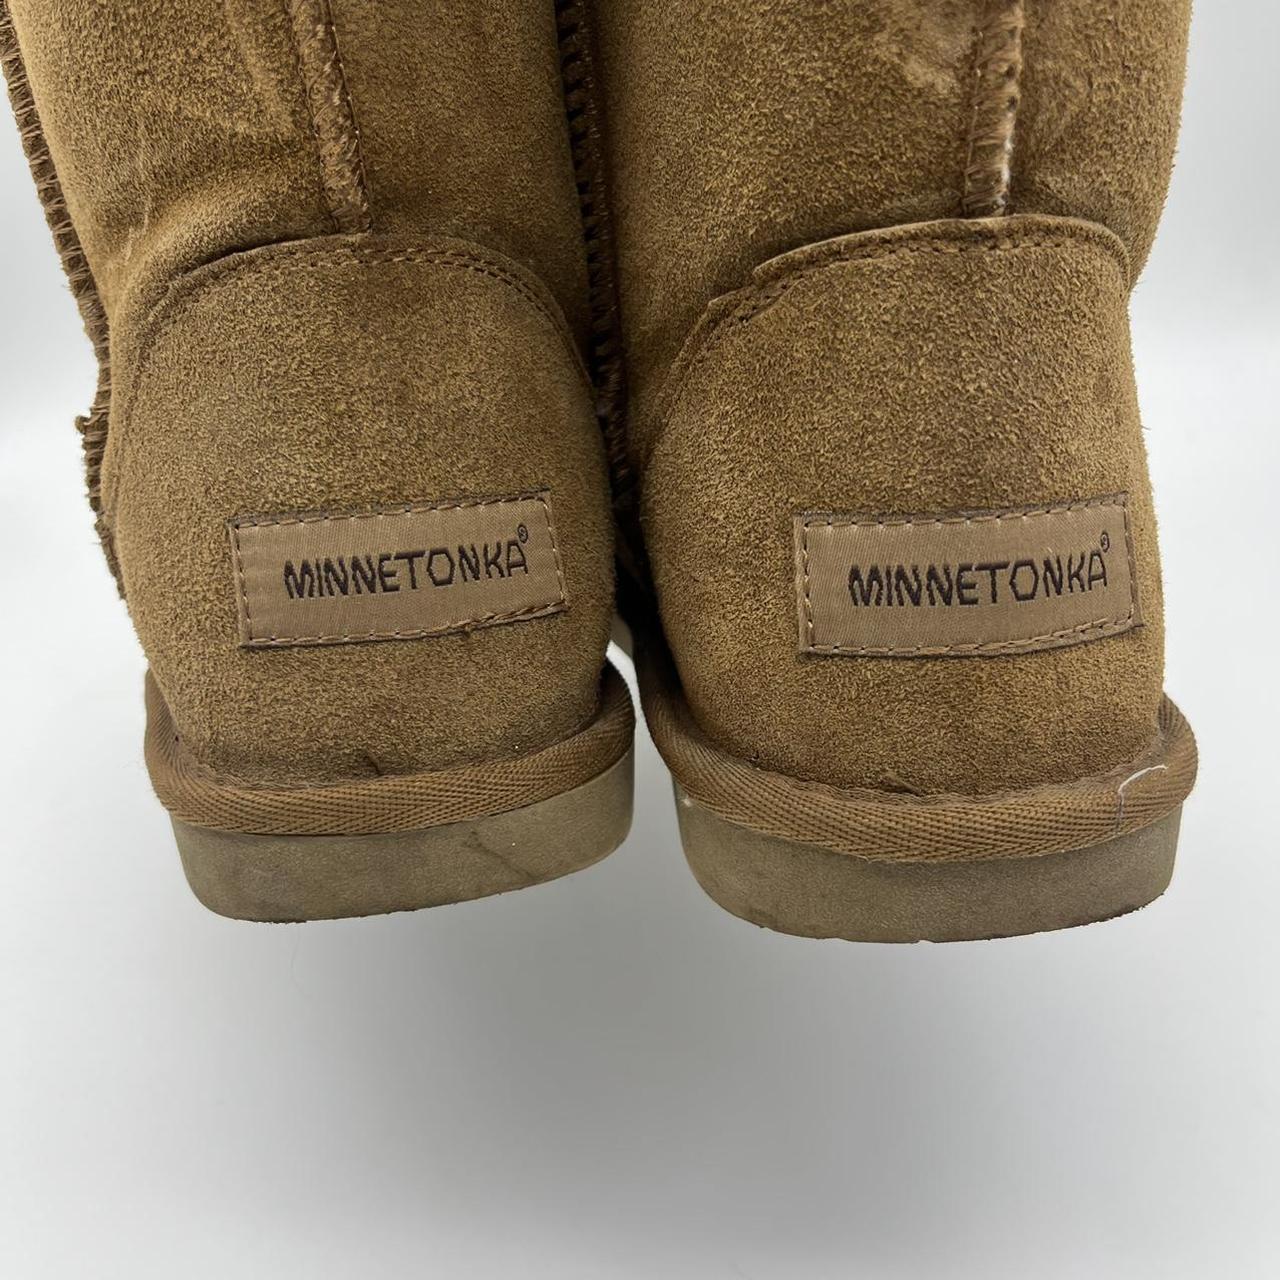 Product Image 2 - Minnetonka Cream Boots

•Minnetonka Tan Fur